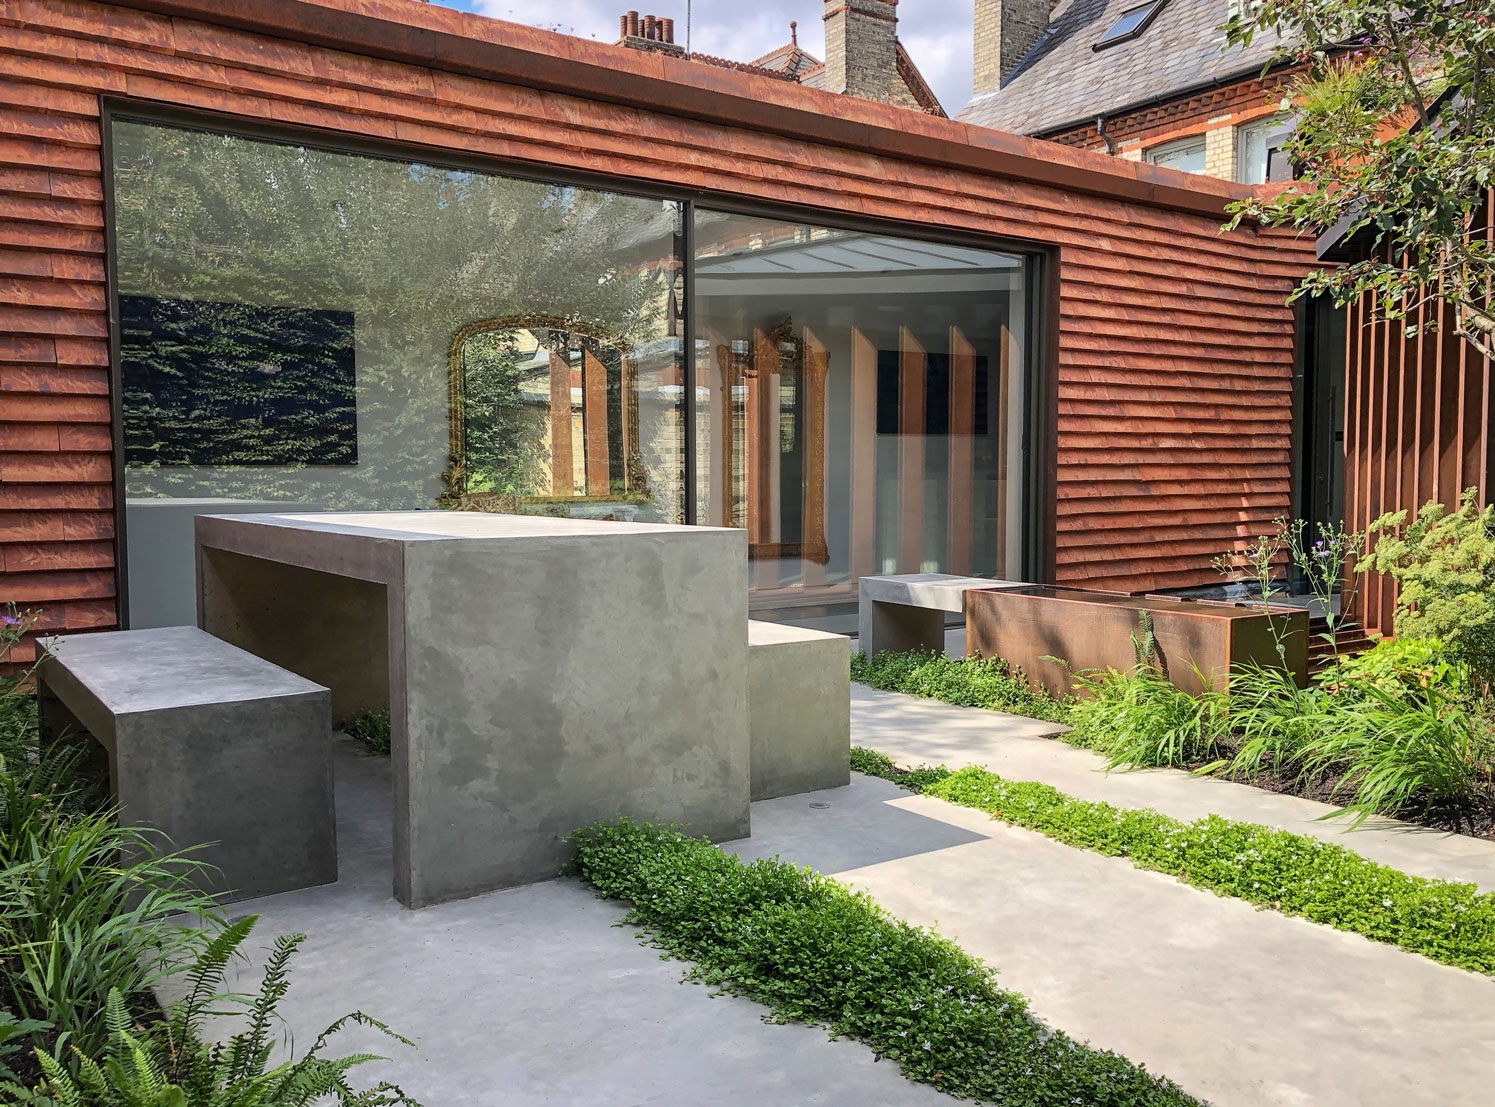 Colm Joseph Cambridge garden design modern house petersen bricks concrete furniture architecture extension